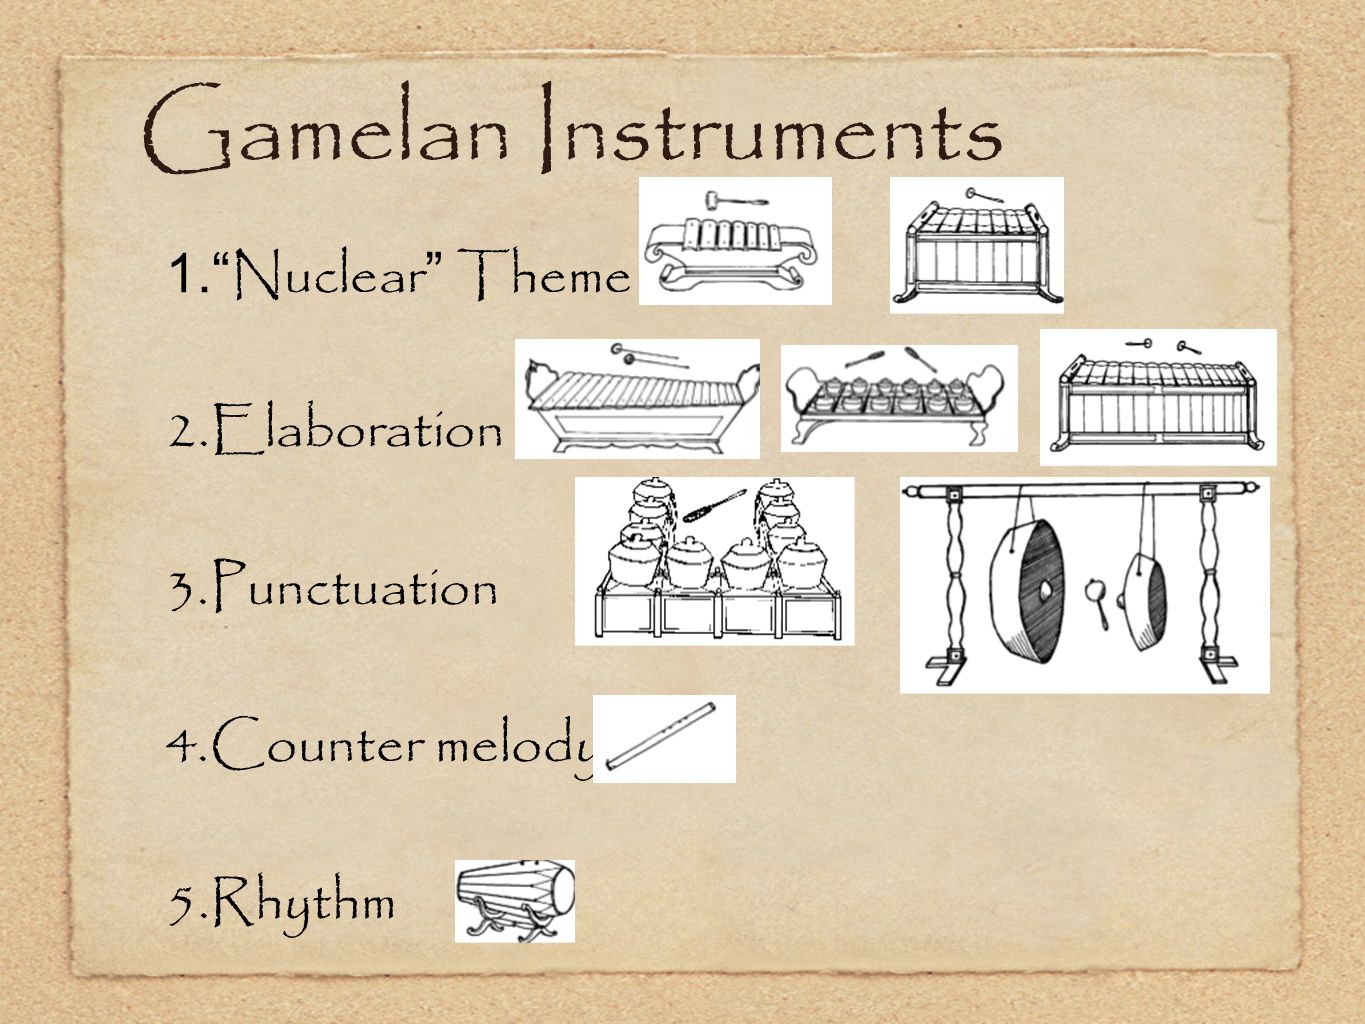 Javanese Gamelan Music and Instruments. This is Gamelan Sulukala, Built for  Goddard College in Plainfield, Vermont, USA. by Suhirdjan, Gamelan Builder.  - ppt download